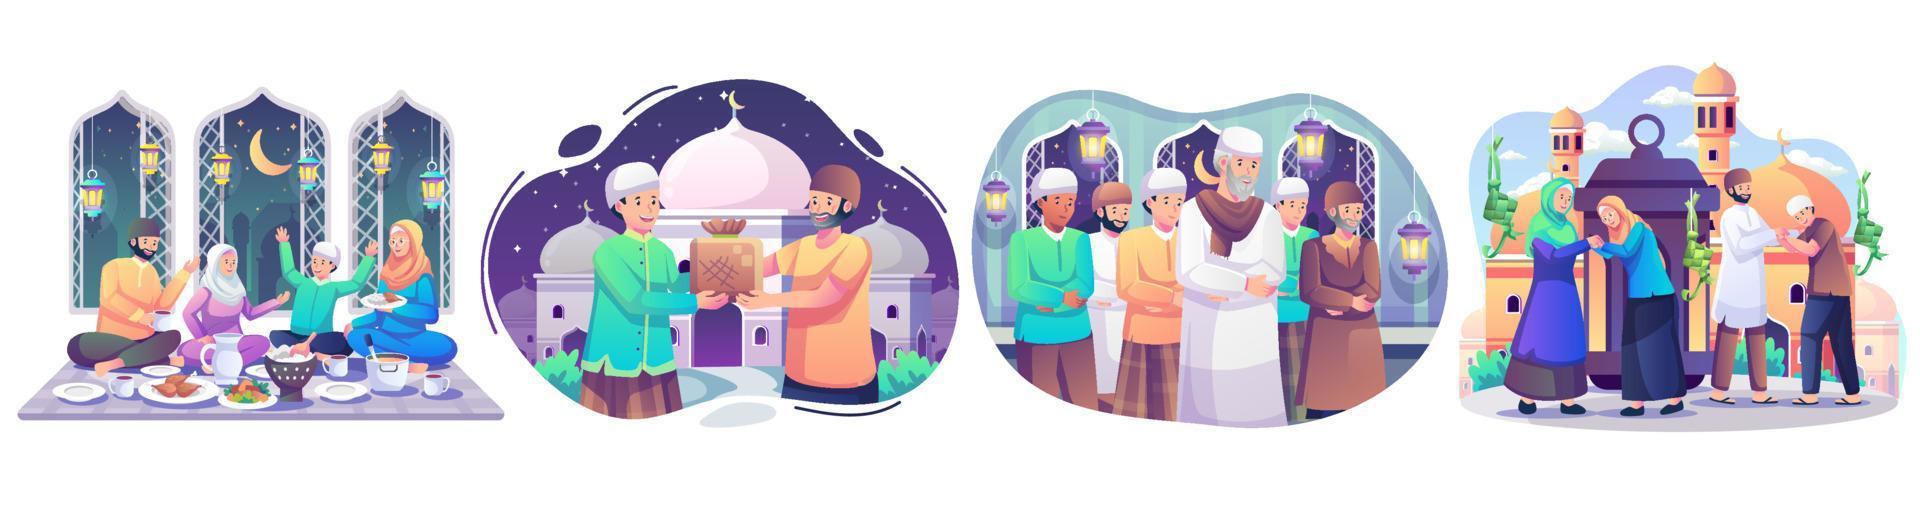 Set of Ramadan concept illustration. Happy Muslim people celebrate Holy Month Ramadan, Iftar Party, Reading Qur'an, Taraweeh, Eid Mubarak greeting. vector illustration